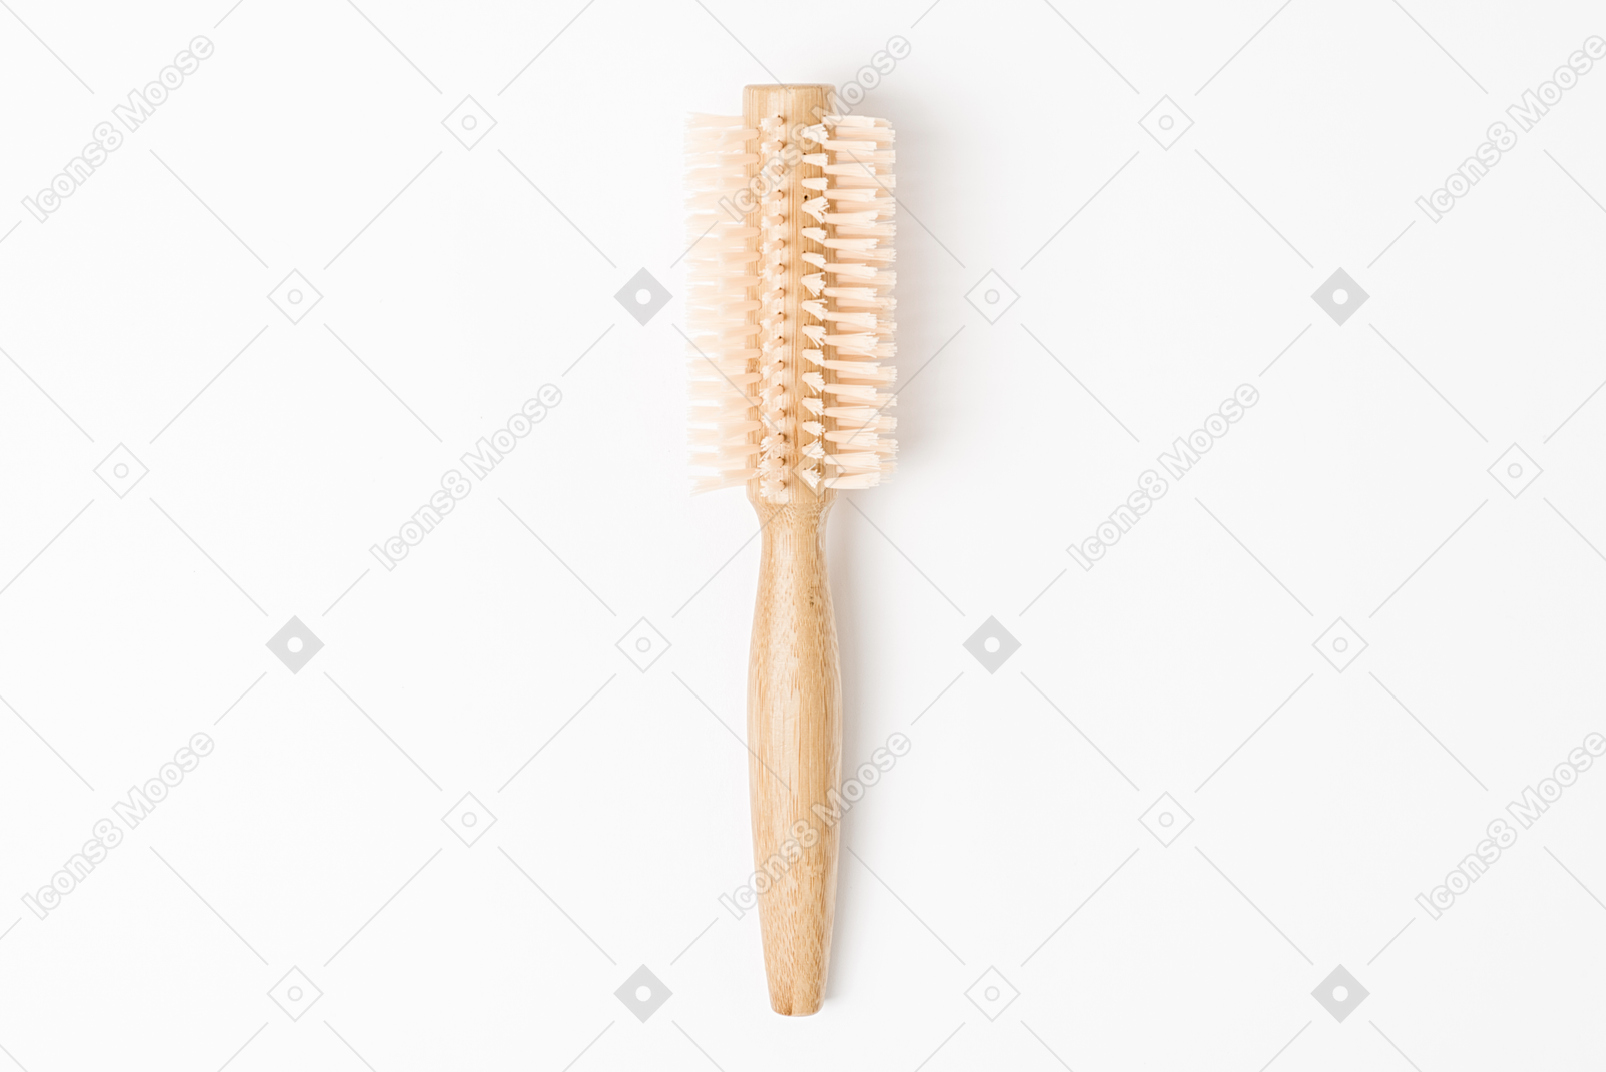 Round wooden hairbrush